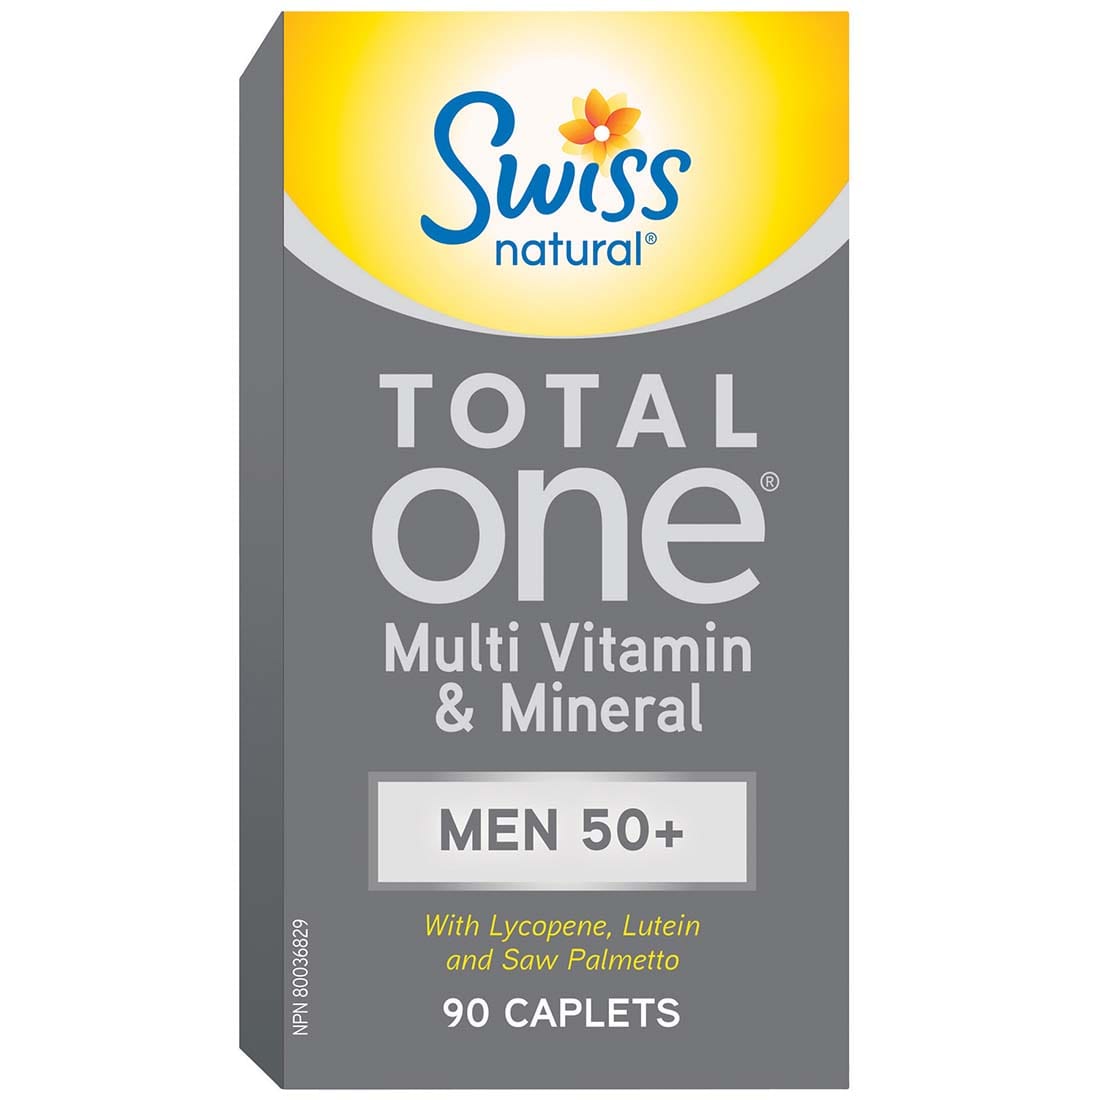 Swiss Natural Total One Multi Vitamin & Mineral Men 50+, 90 Caplets